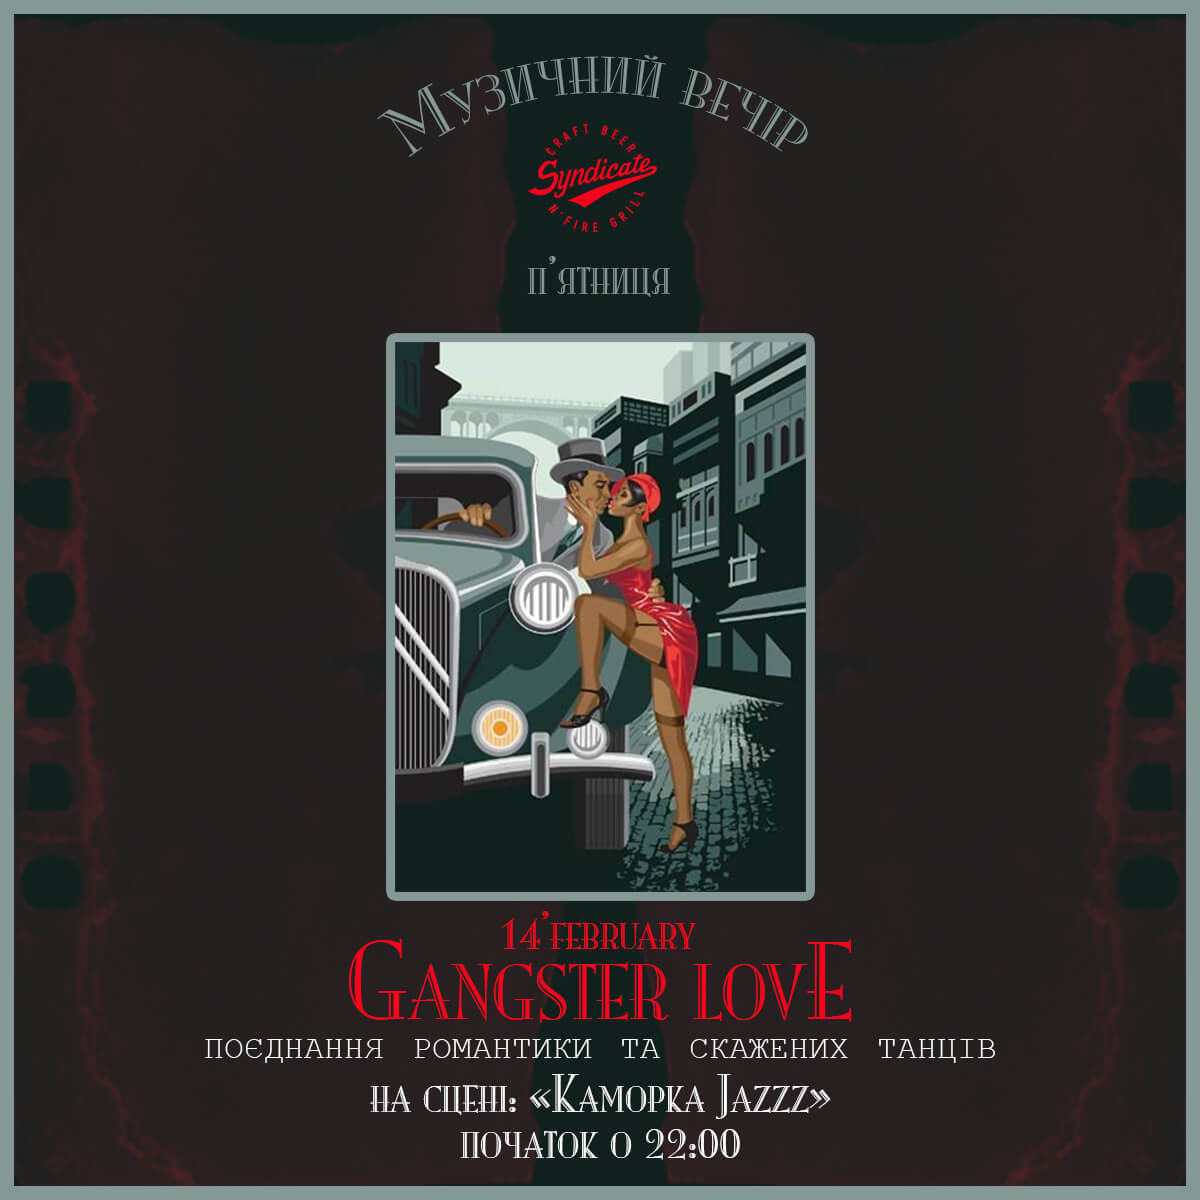 14 февраля музыкальный вечер “Gangster love”